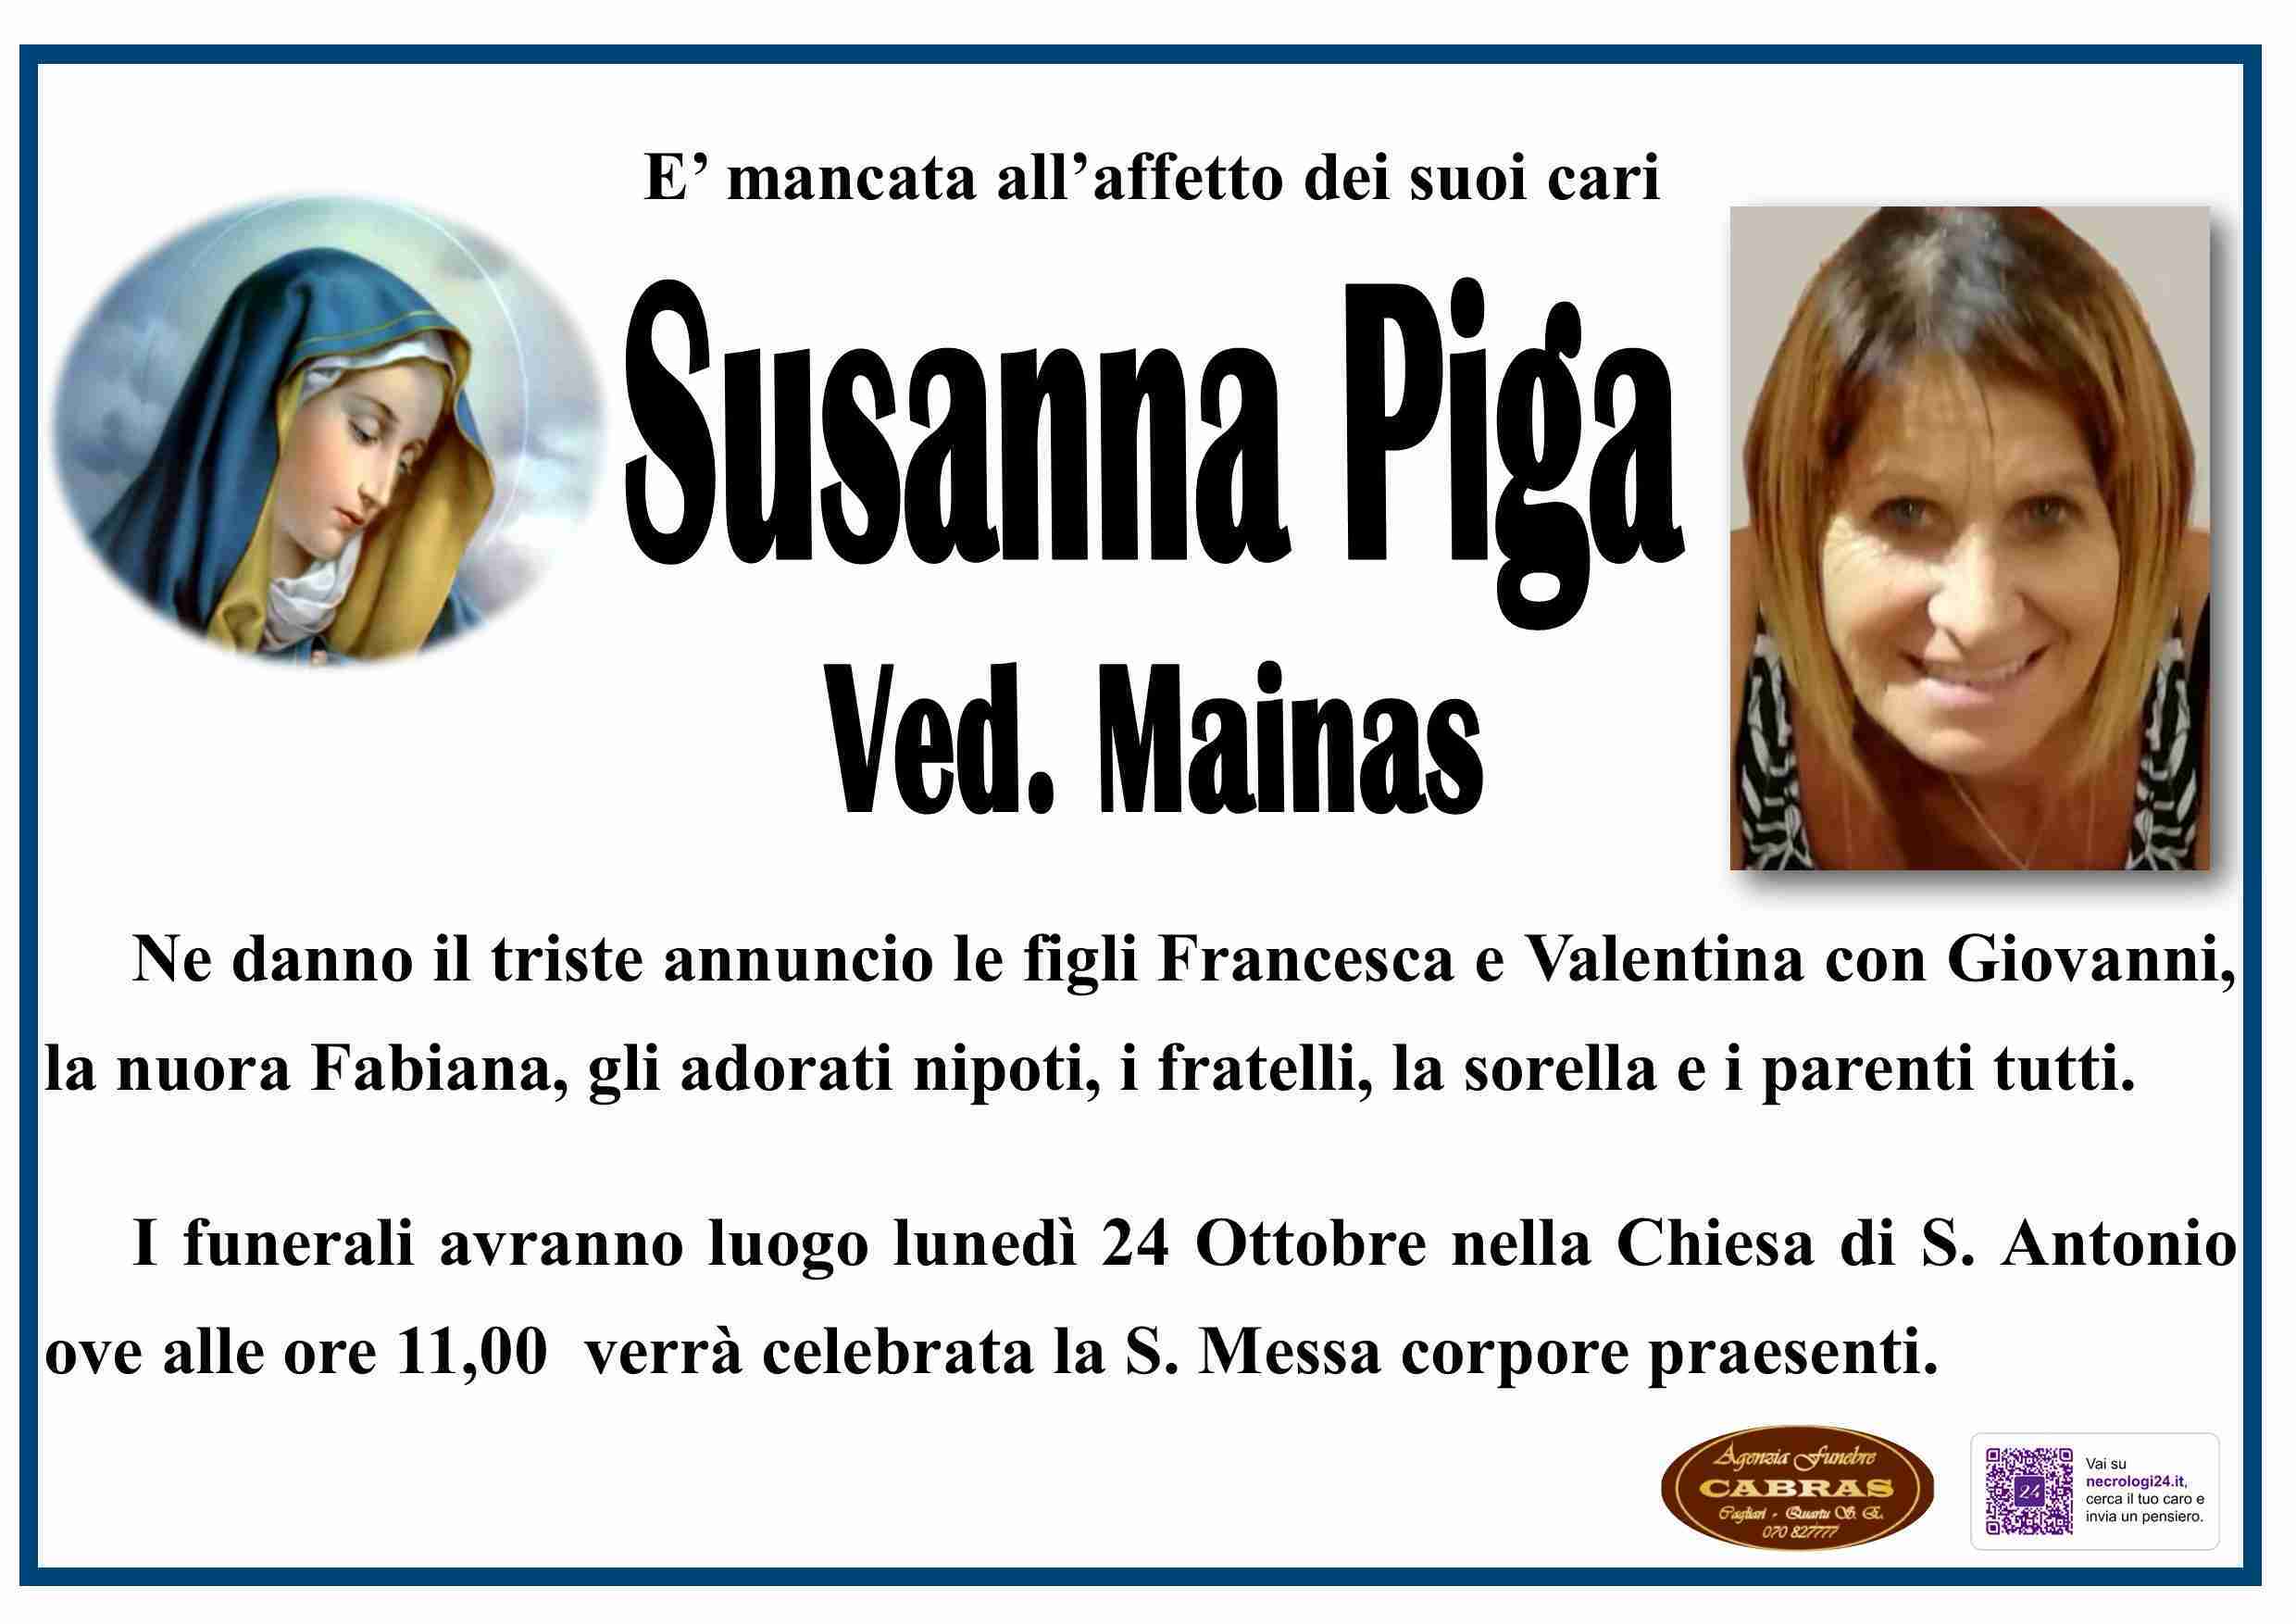 Susanna Piga